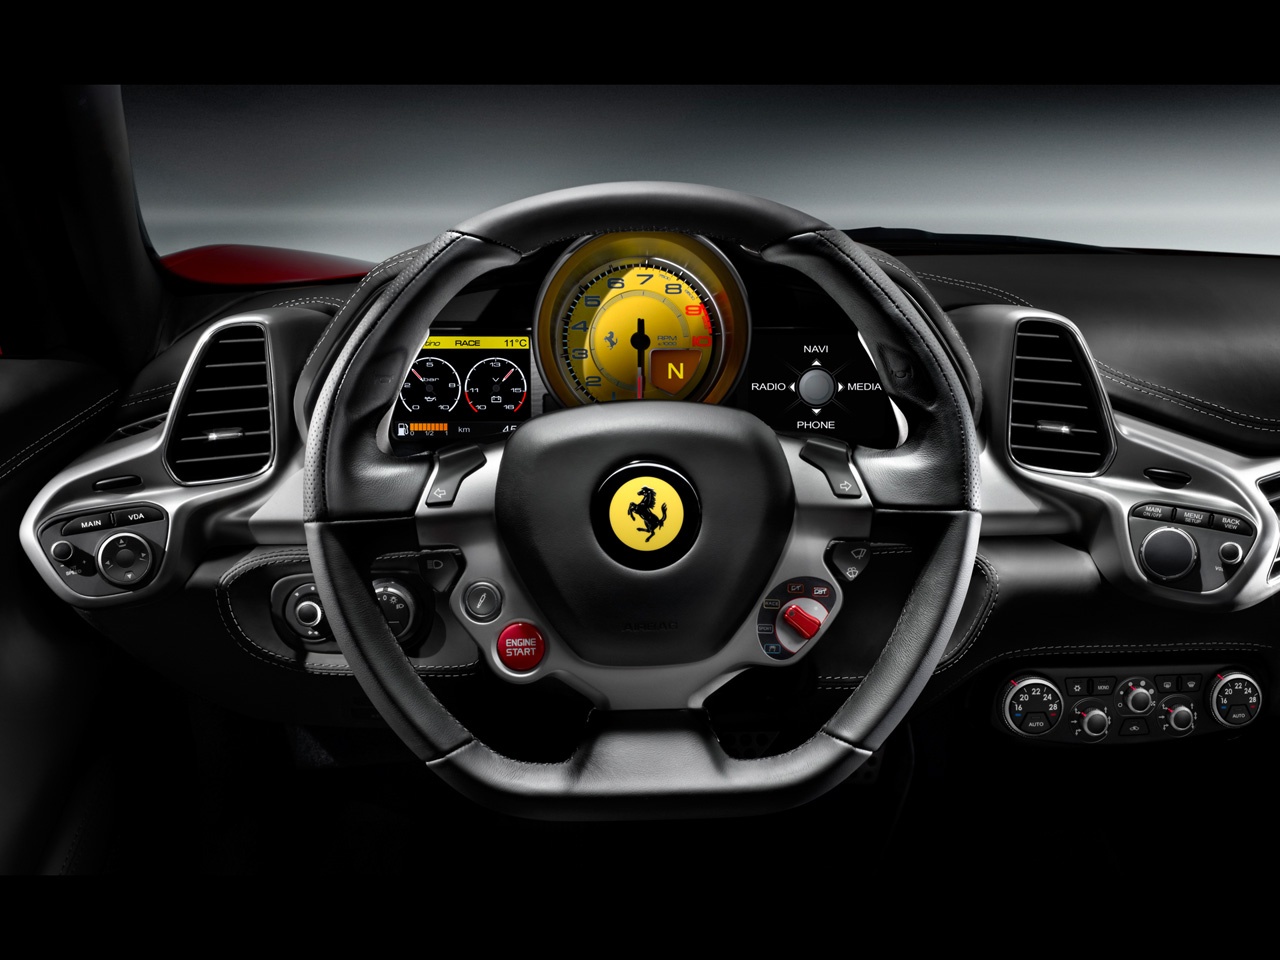 http://2.bp.blogspot.com/_XAfd_7tucsw/S9BLJcUuvKI/AAAAAAAAELQ/TB4CggaBEqg/s1600/2010+Ferrari+458+Italia+-+Dashboard.jpg